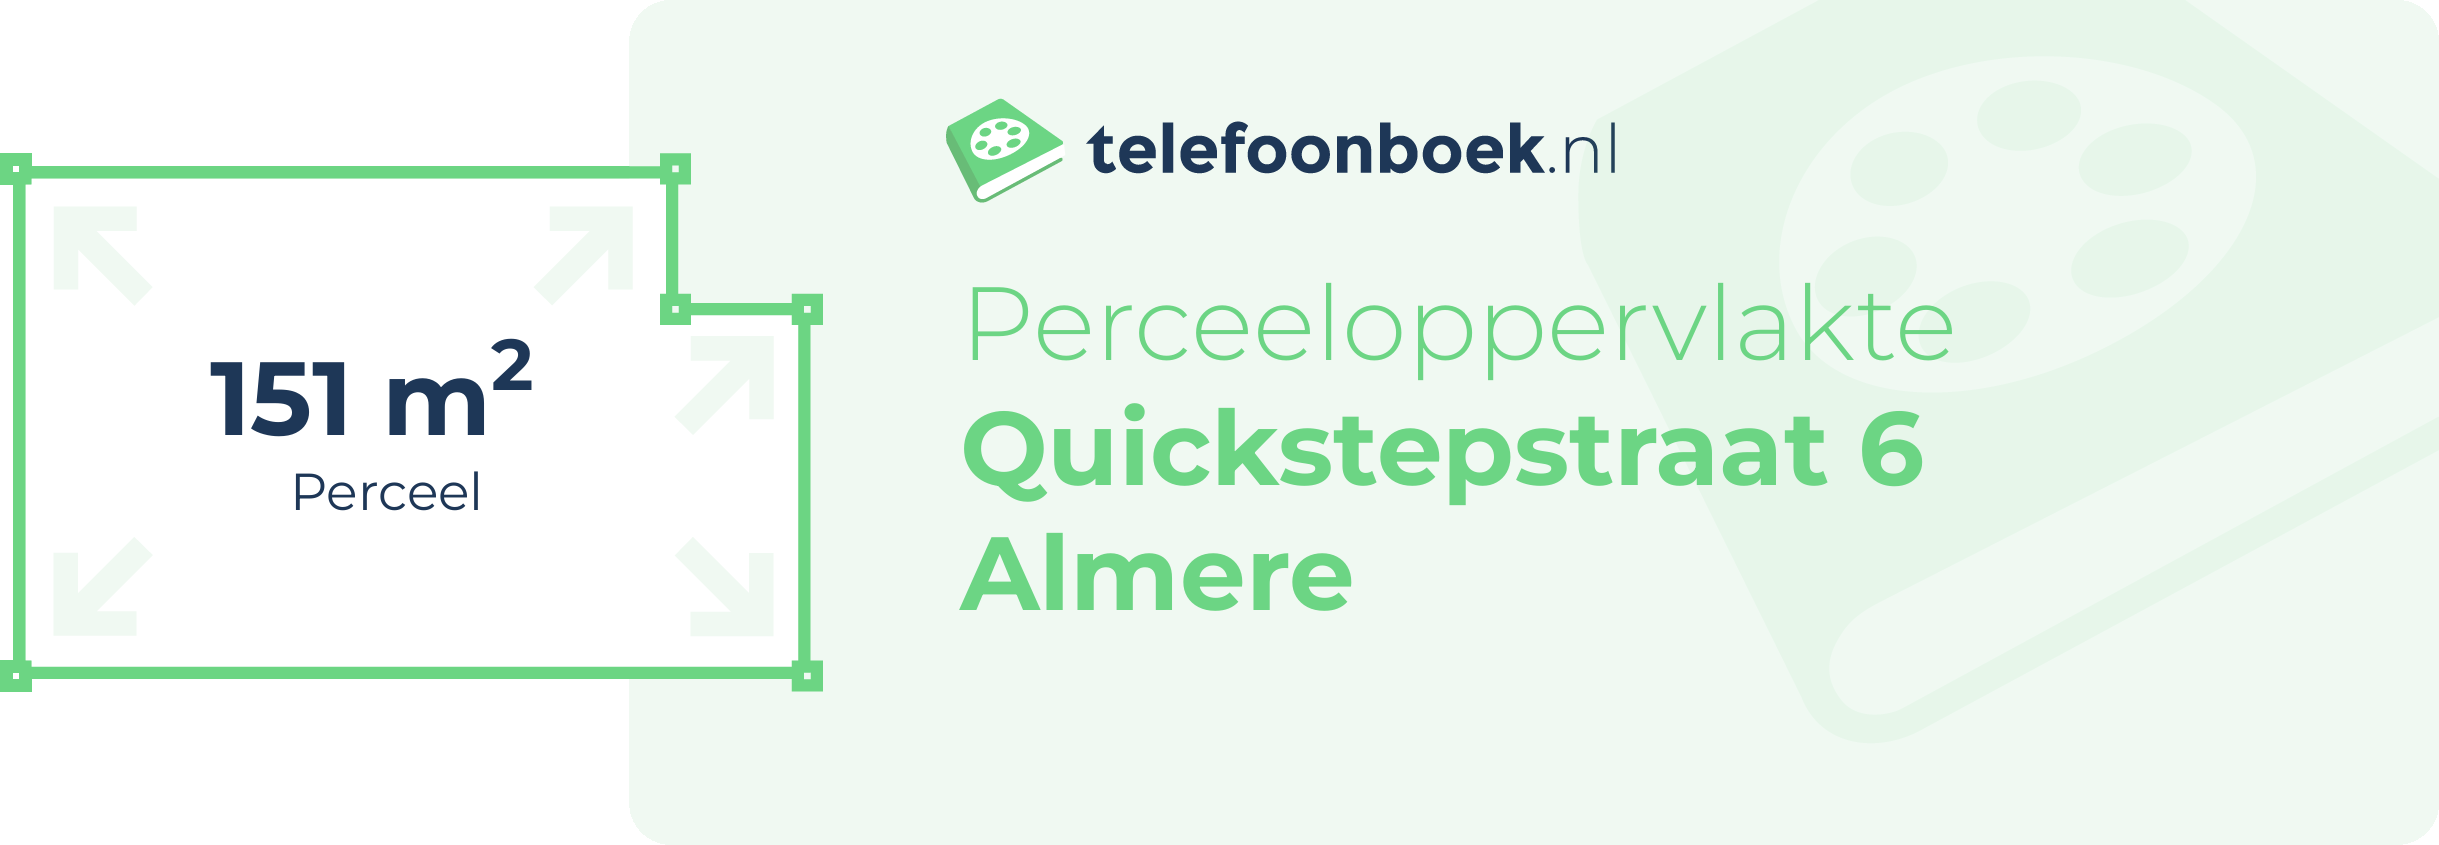 Perceeloppervlakte Quickstepstraat 6 Almere